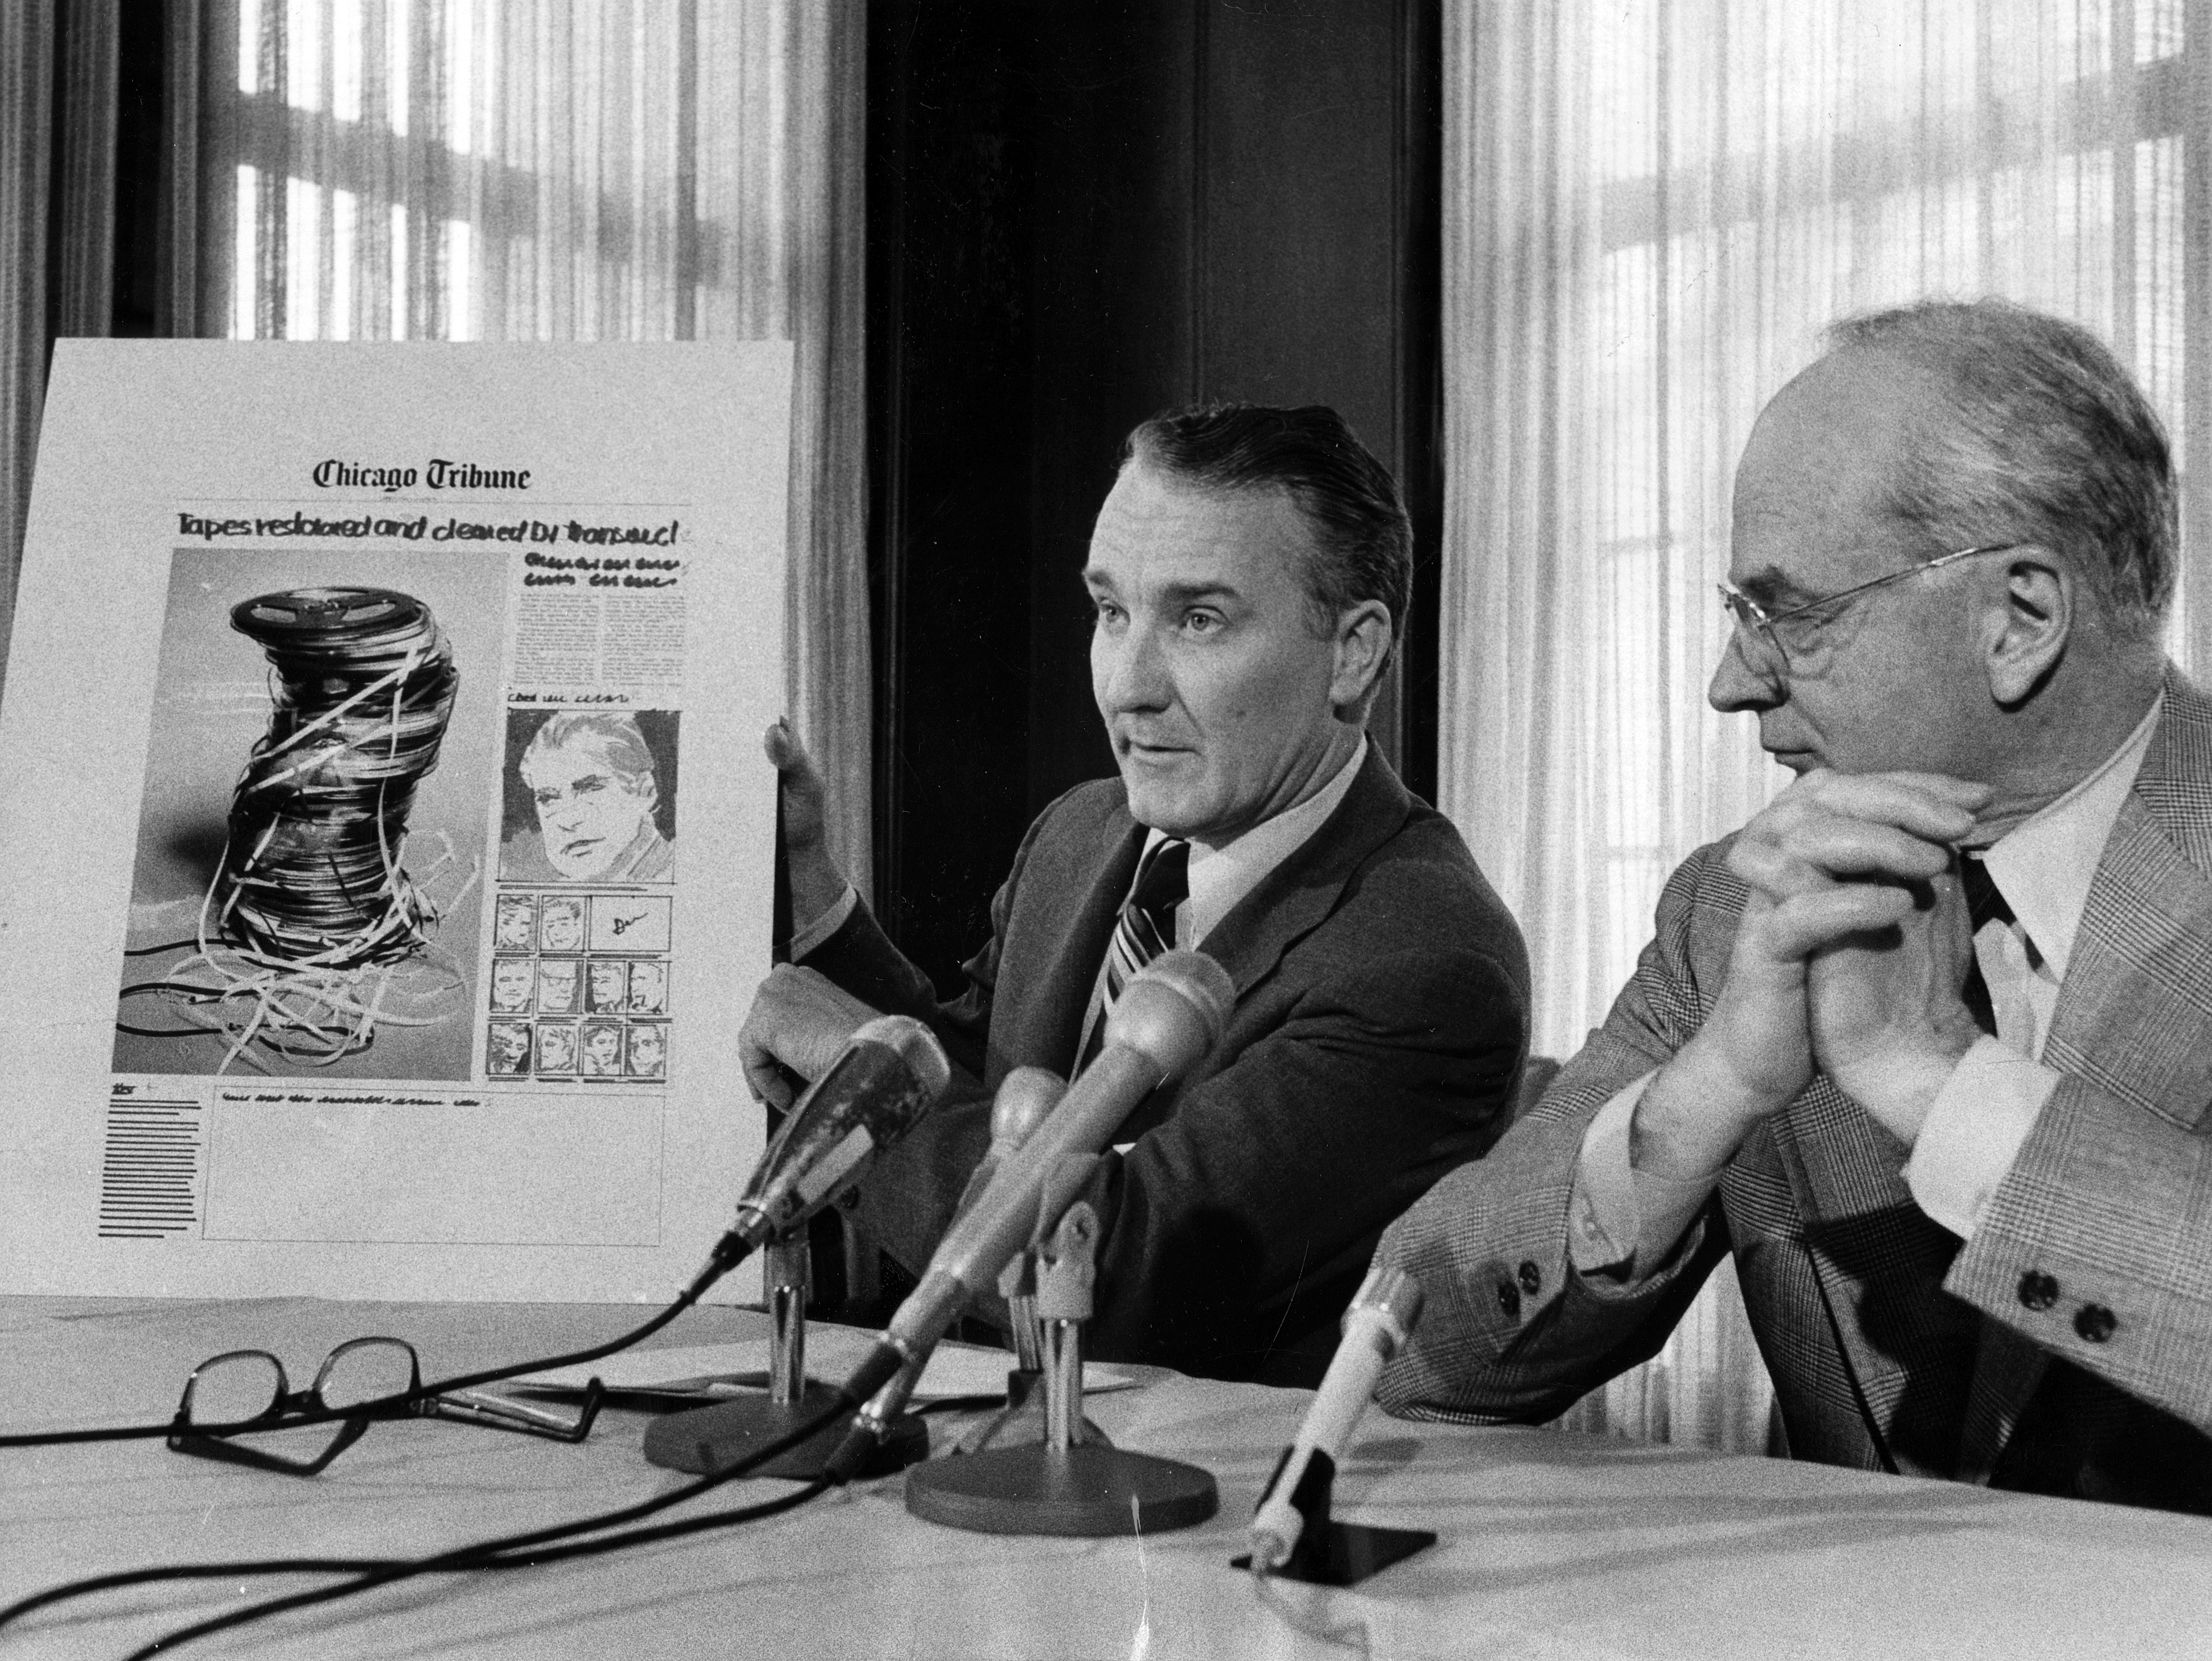 Chicago Tribune publisher Stanton Cook, center, and editor Clayton Kirkpatrick speak at a press conference on April 30, 1974, regarding the Tribune's publication of the Nixon tapes. (Chicago Tribune historical photo)